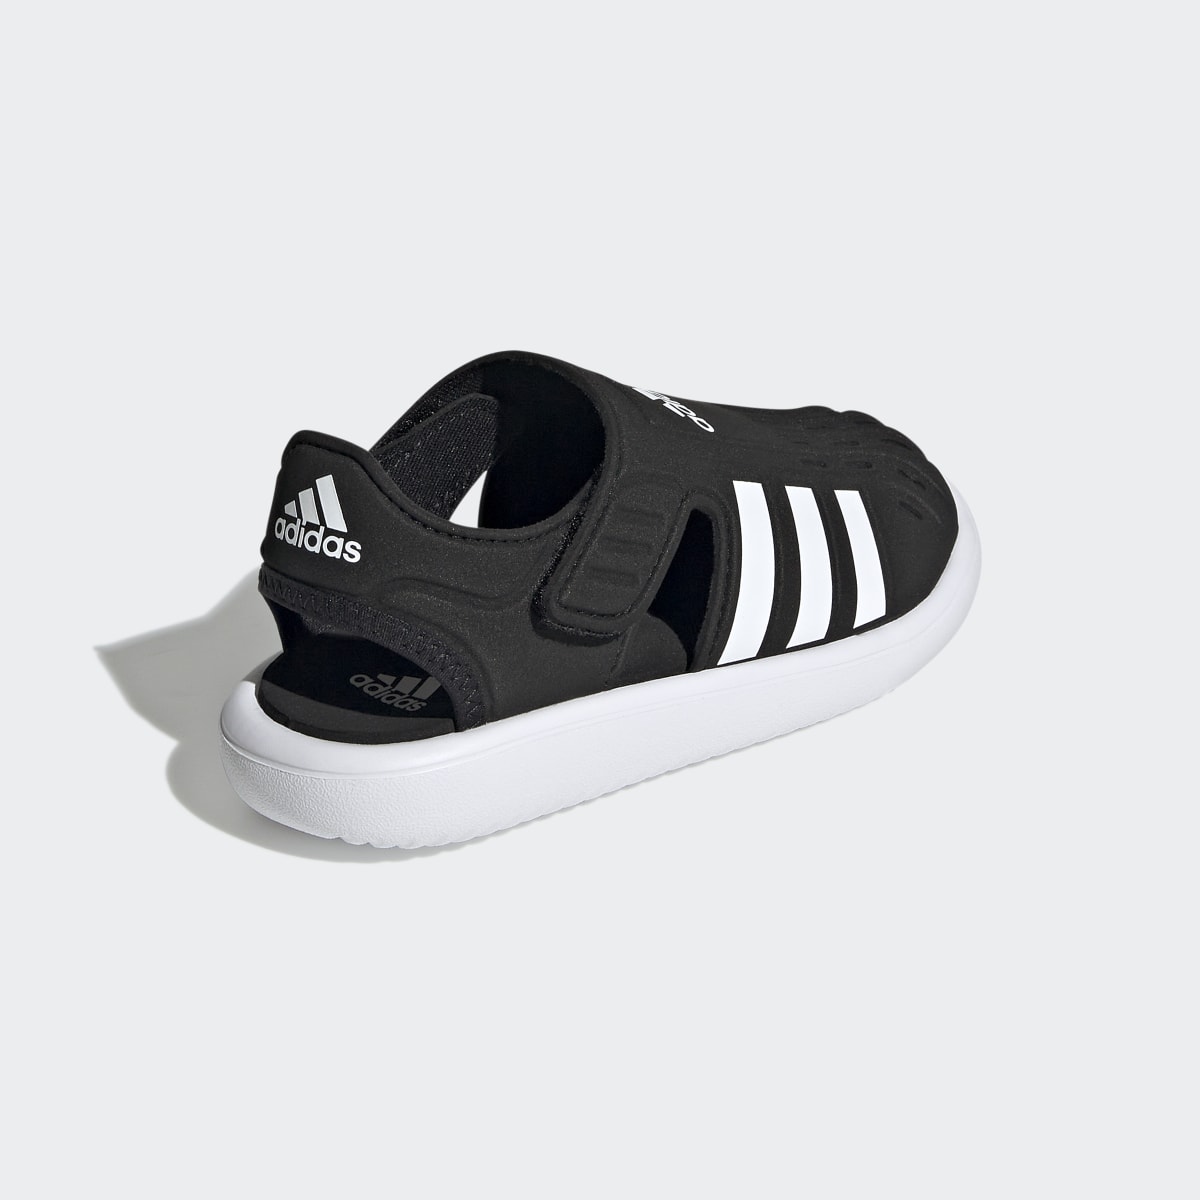 Adidas Summer Closed Toe Water Sandale. 6